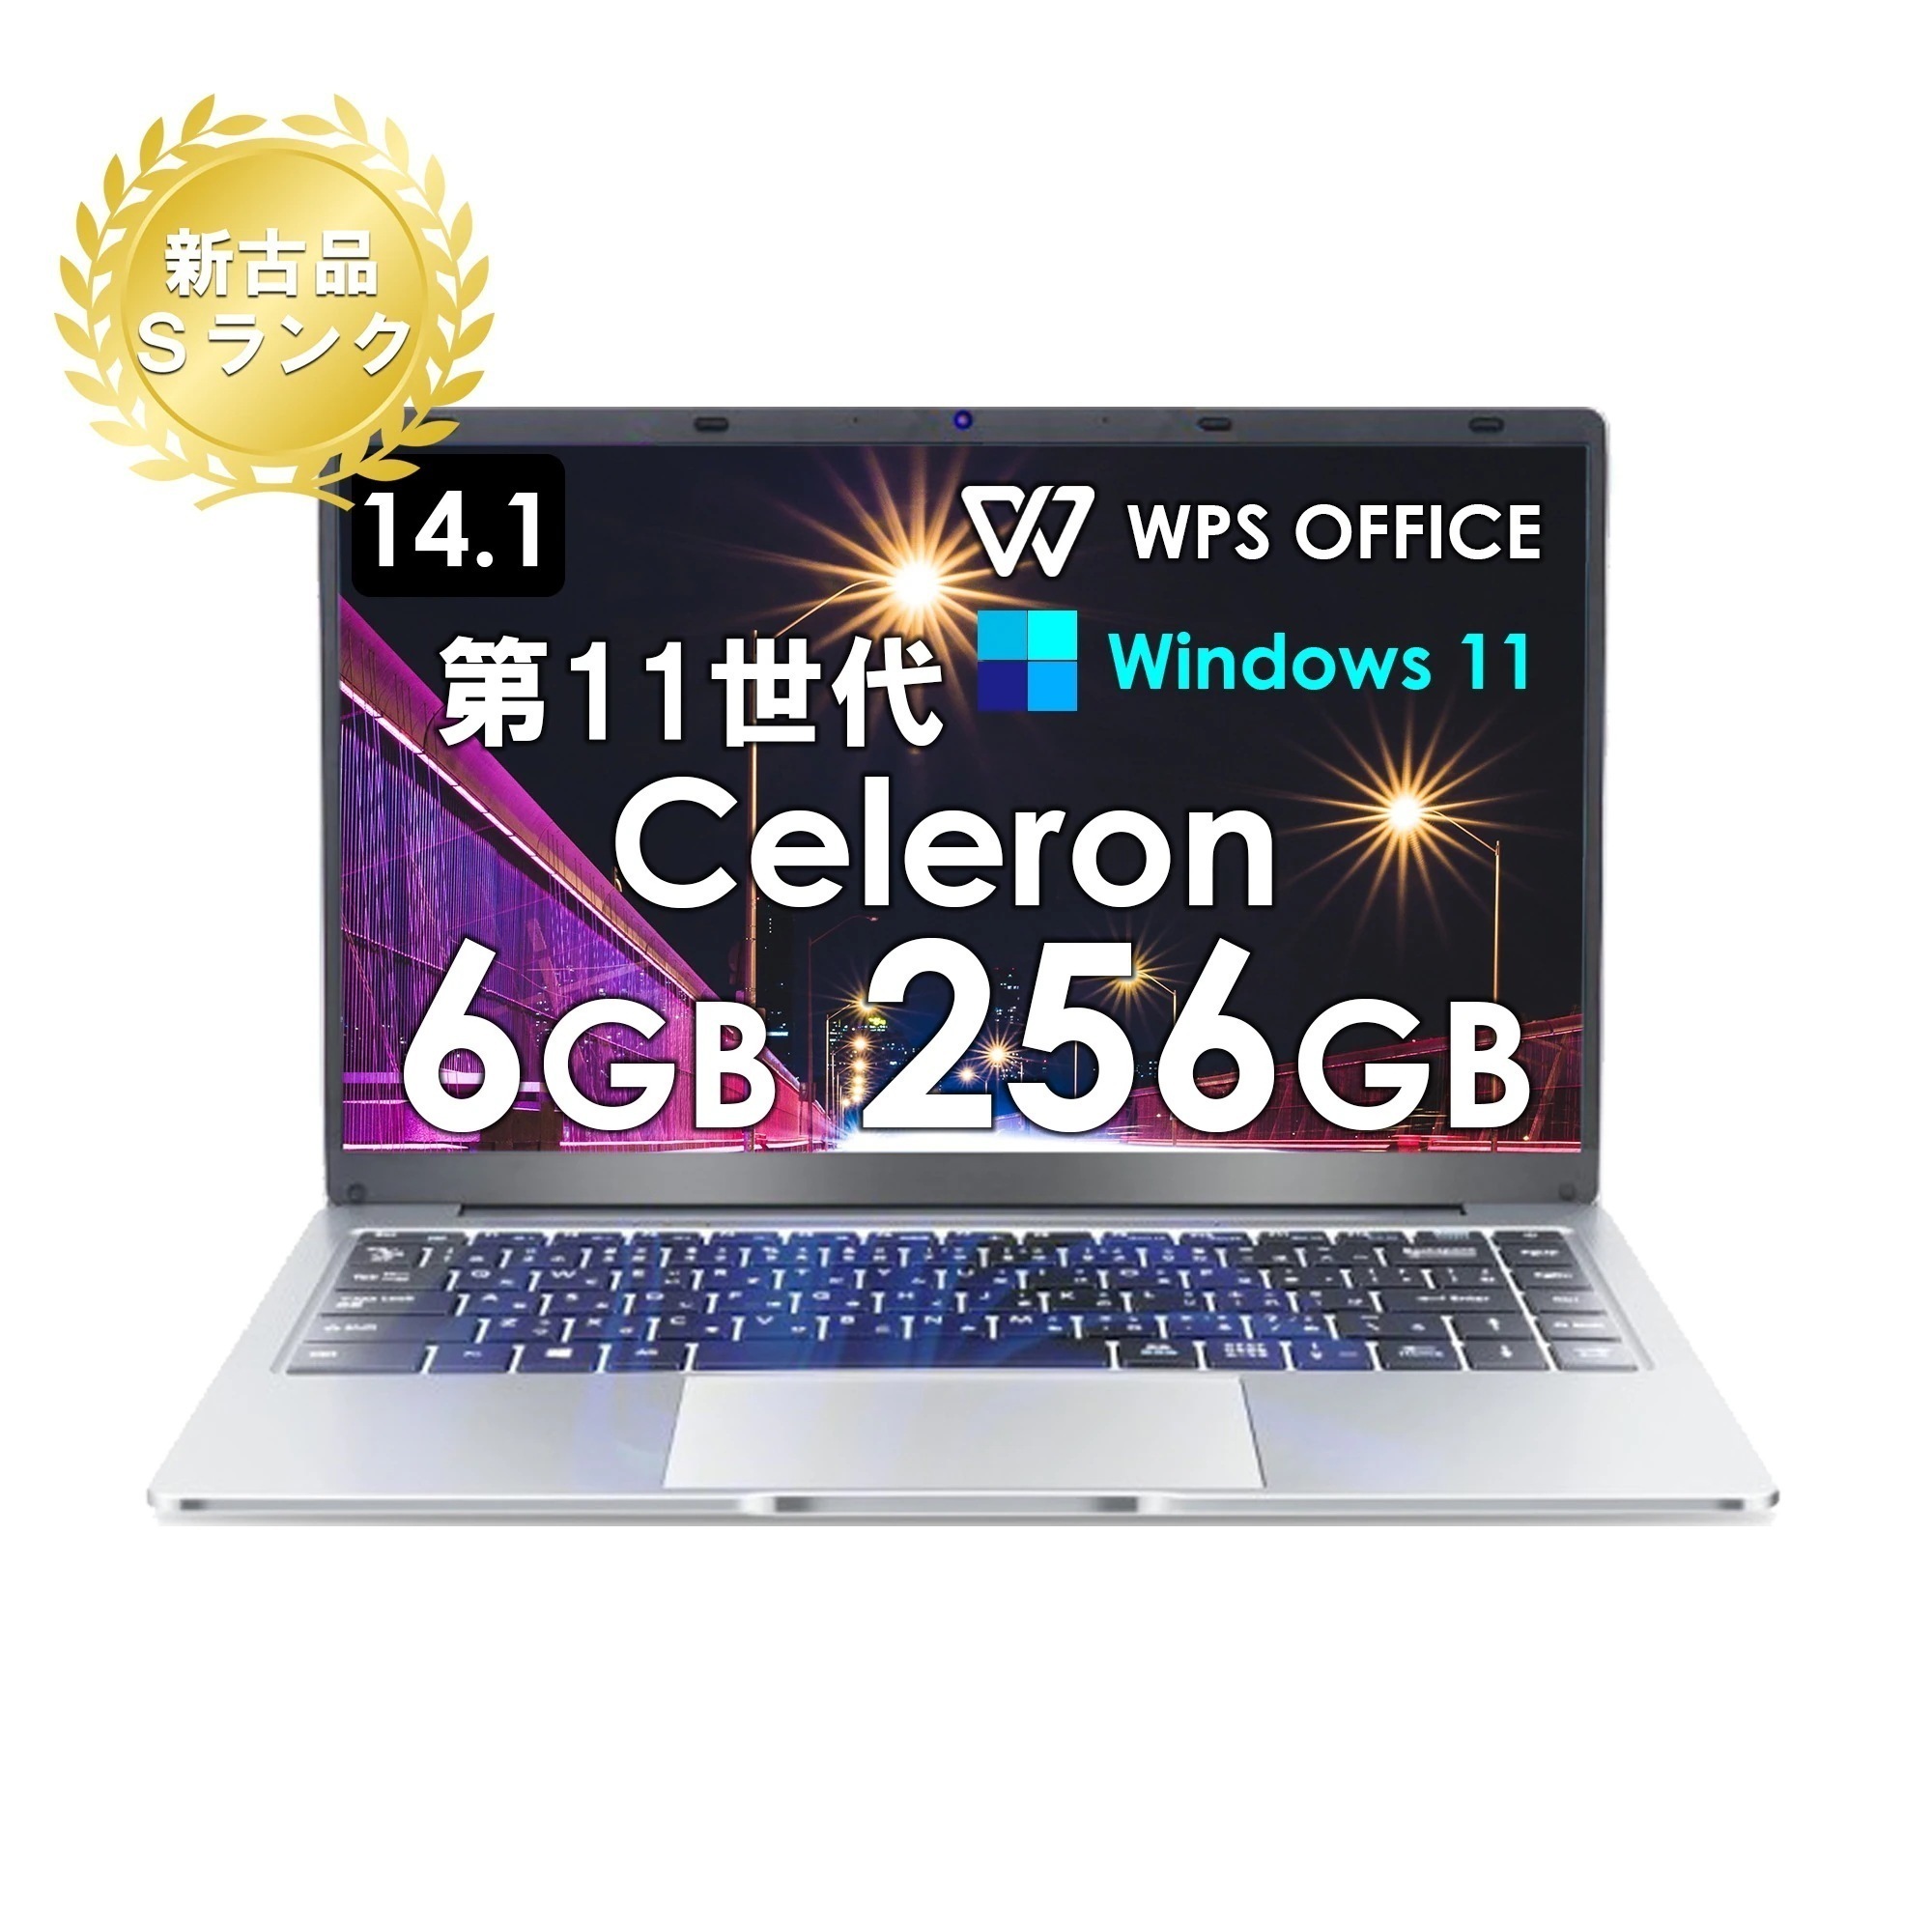 VETESA新古品 ノートパソコン office搭載 Windows11 ノートPC 14インチ Win 11 ノートパソコン 6GB 256GB パソコン インテルCeleron N3350 14Q8L